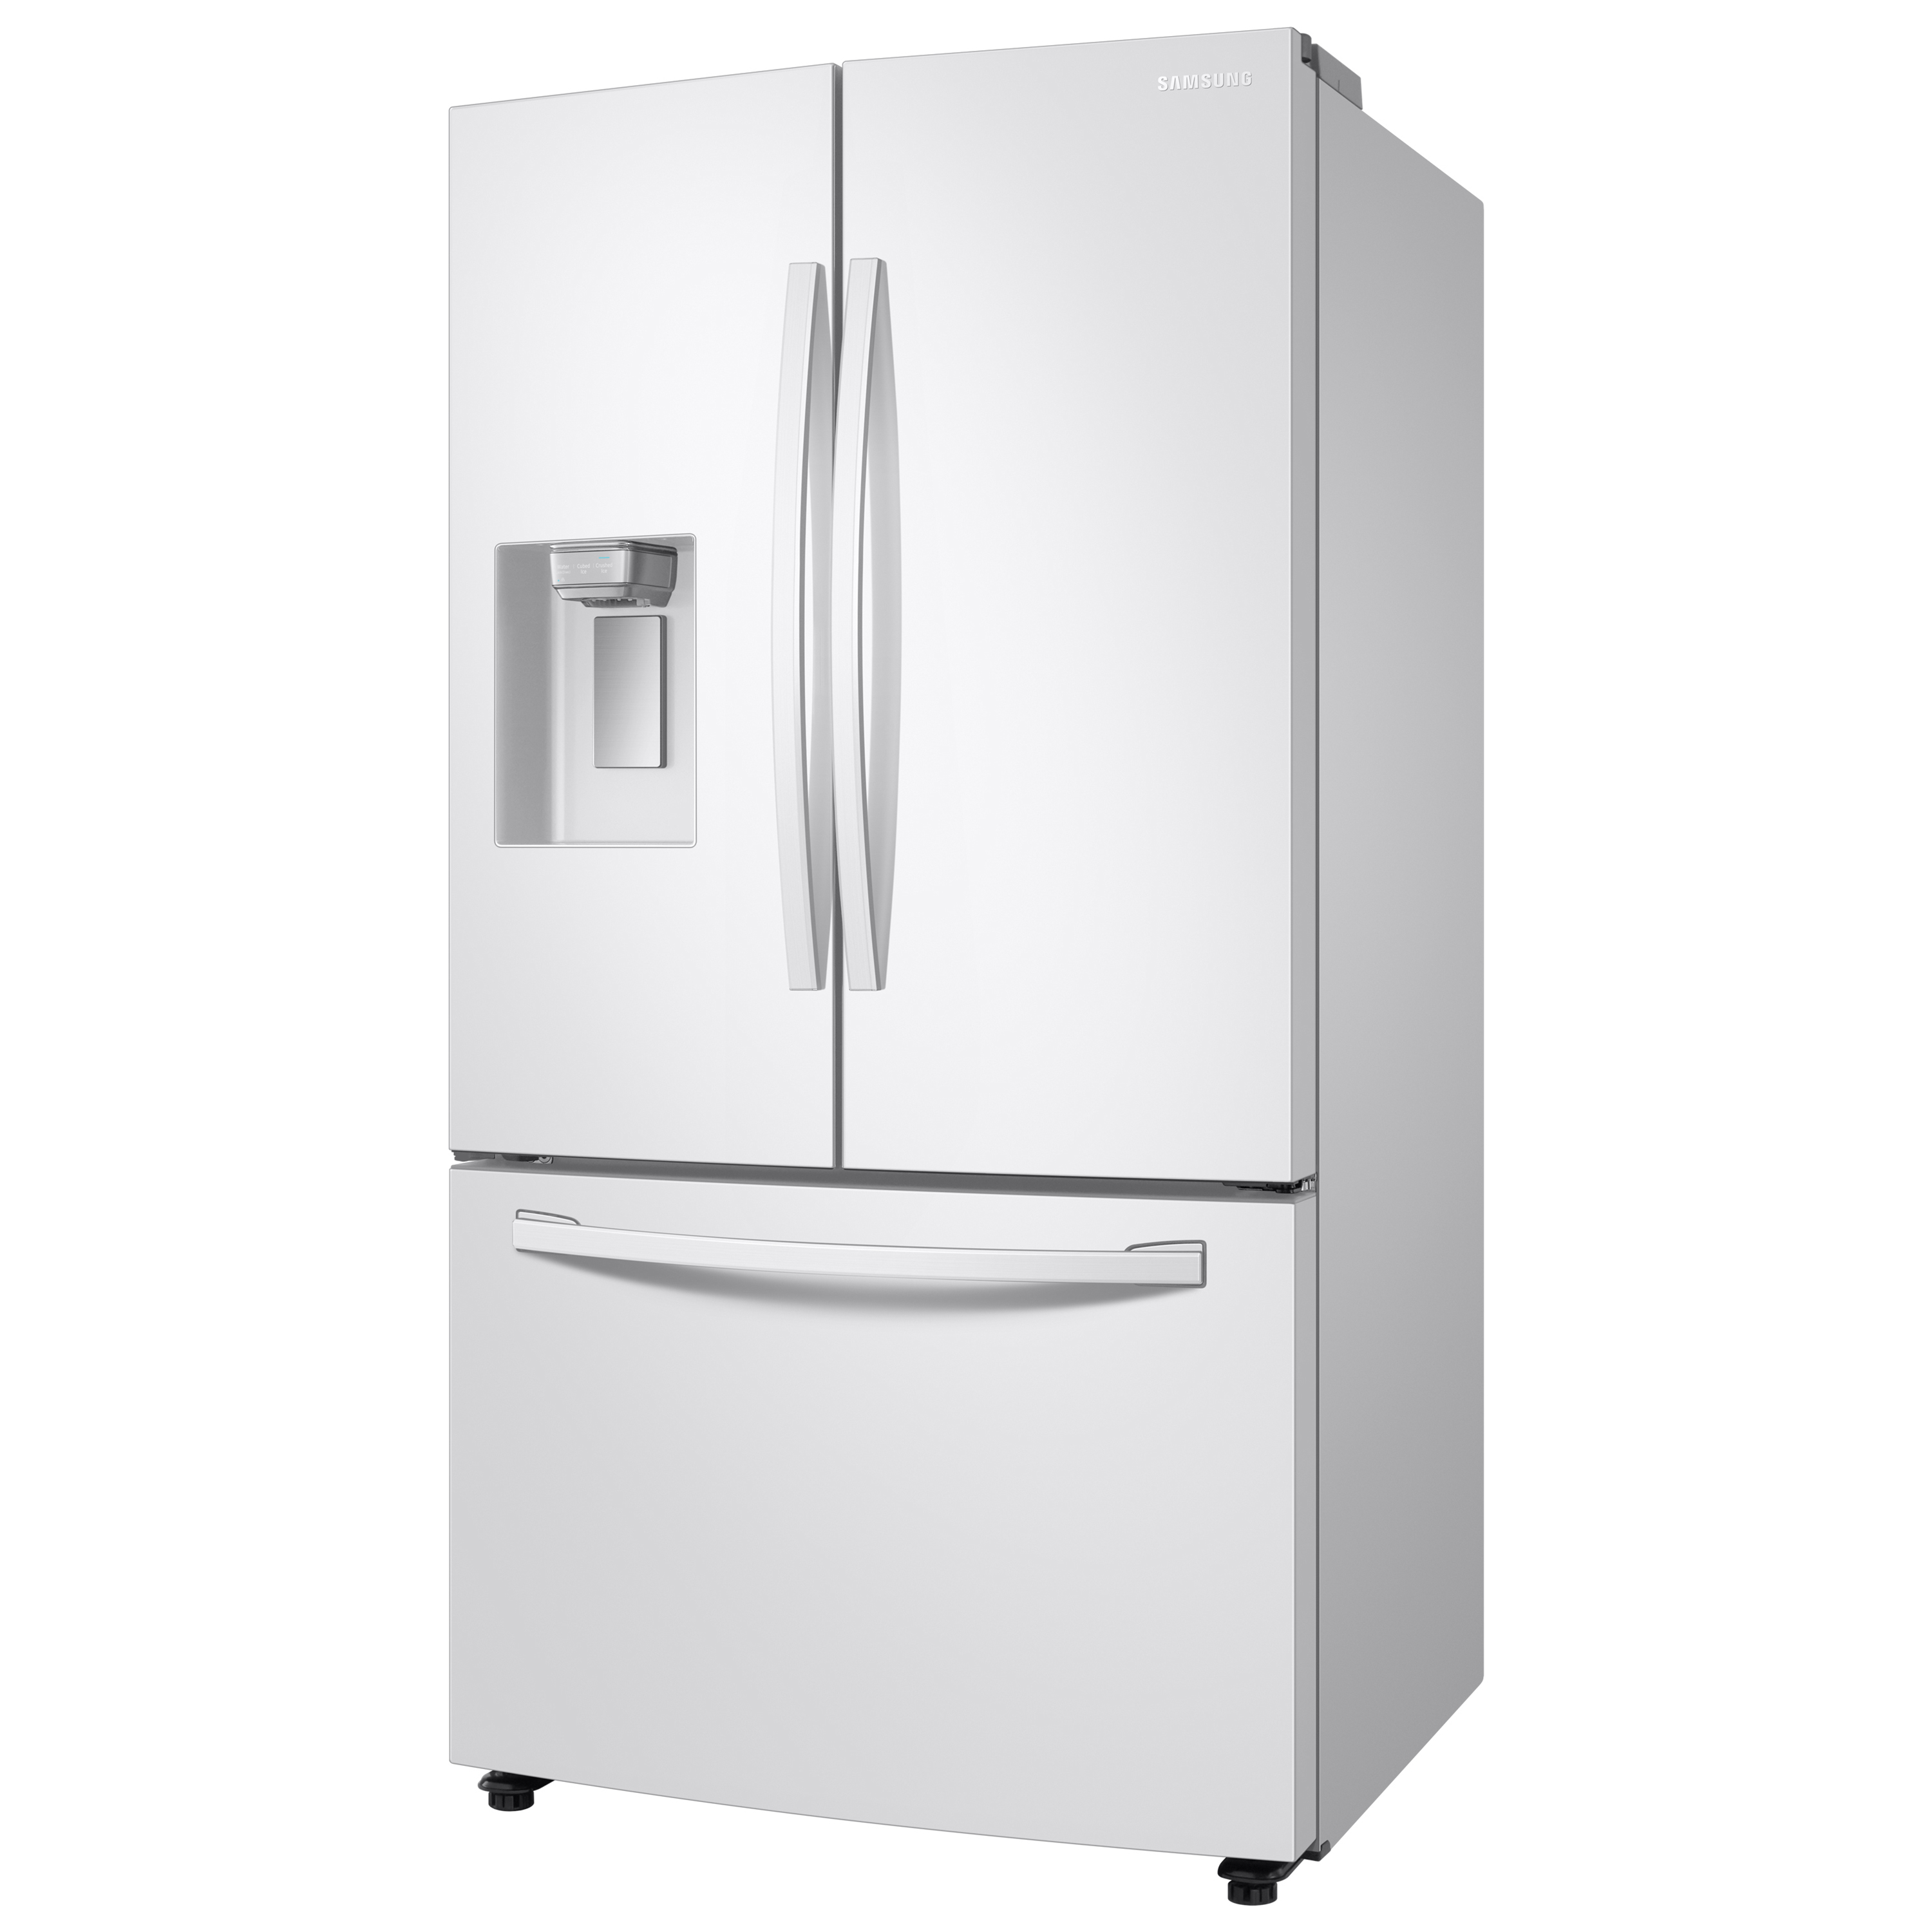 https://image-us.samsung.com/SamsungUS/home/home-appliances/refrigerators/pdp/02022021/gallery/RF28R6222WW_09_White_RCOM.jpg?$product-details-jpg$